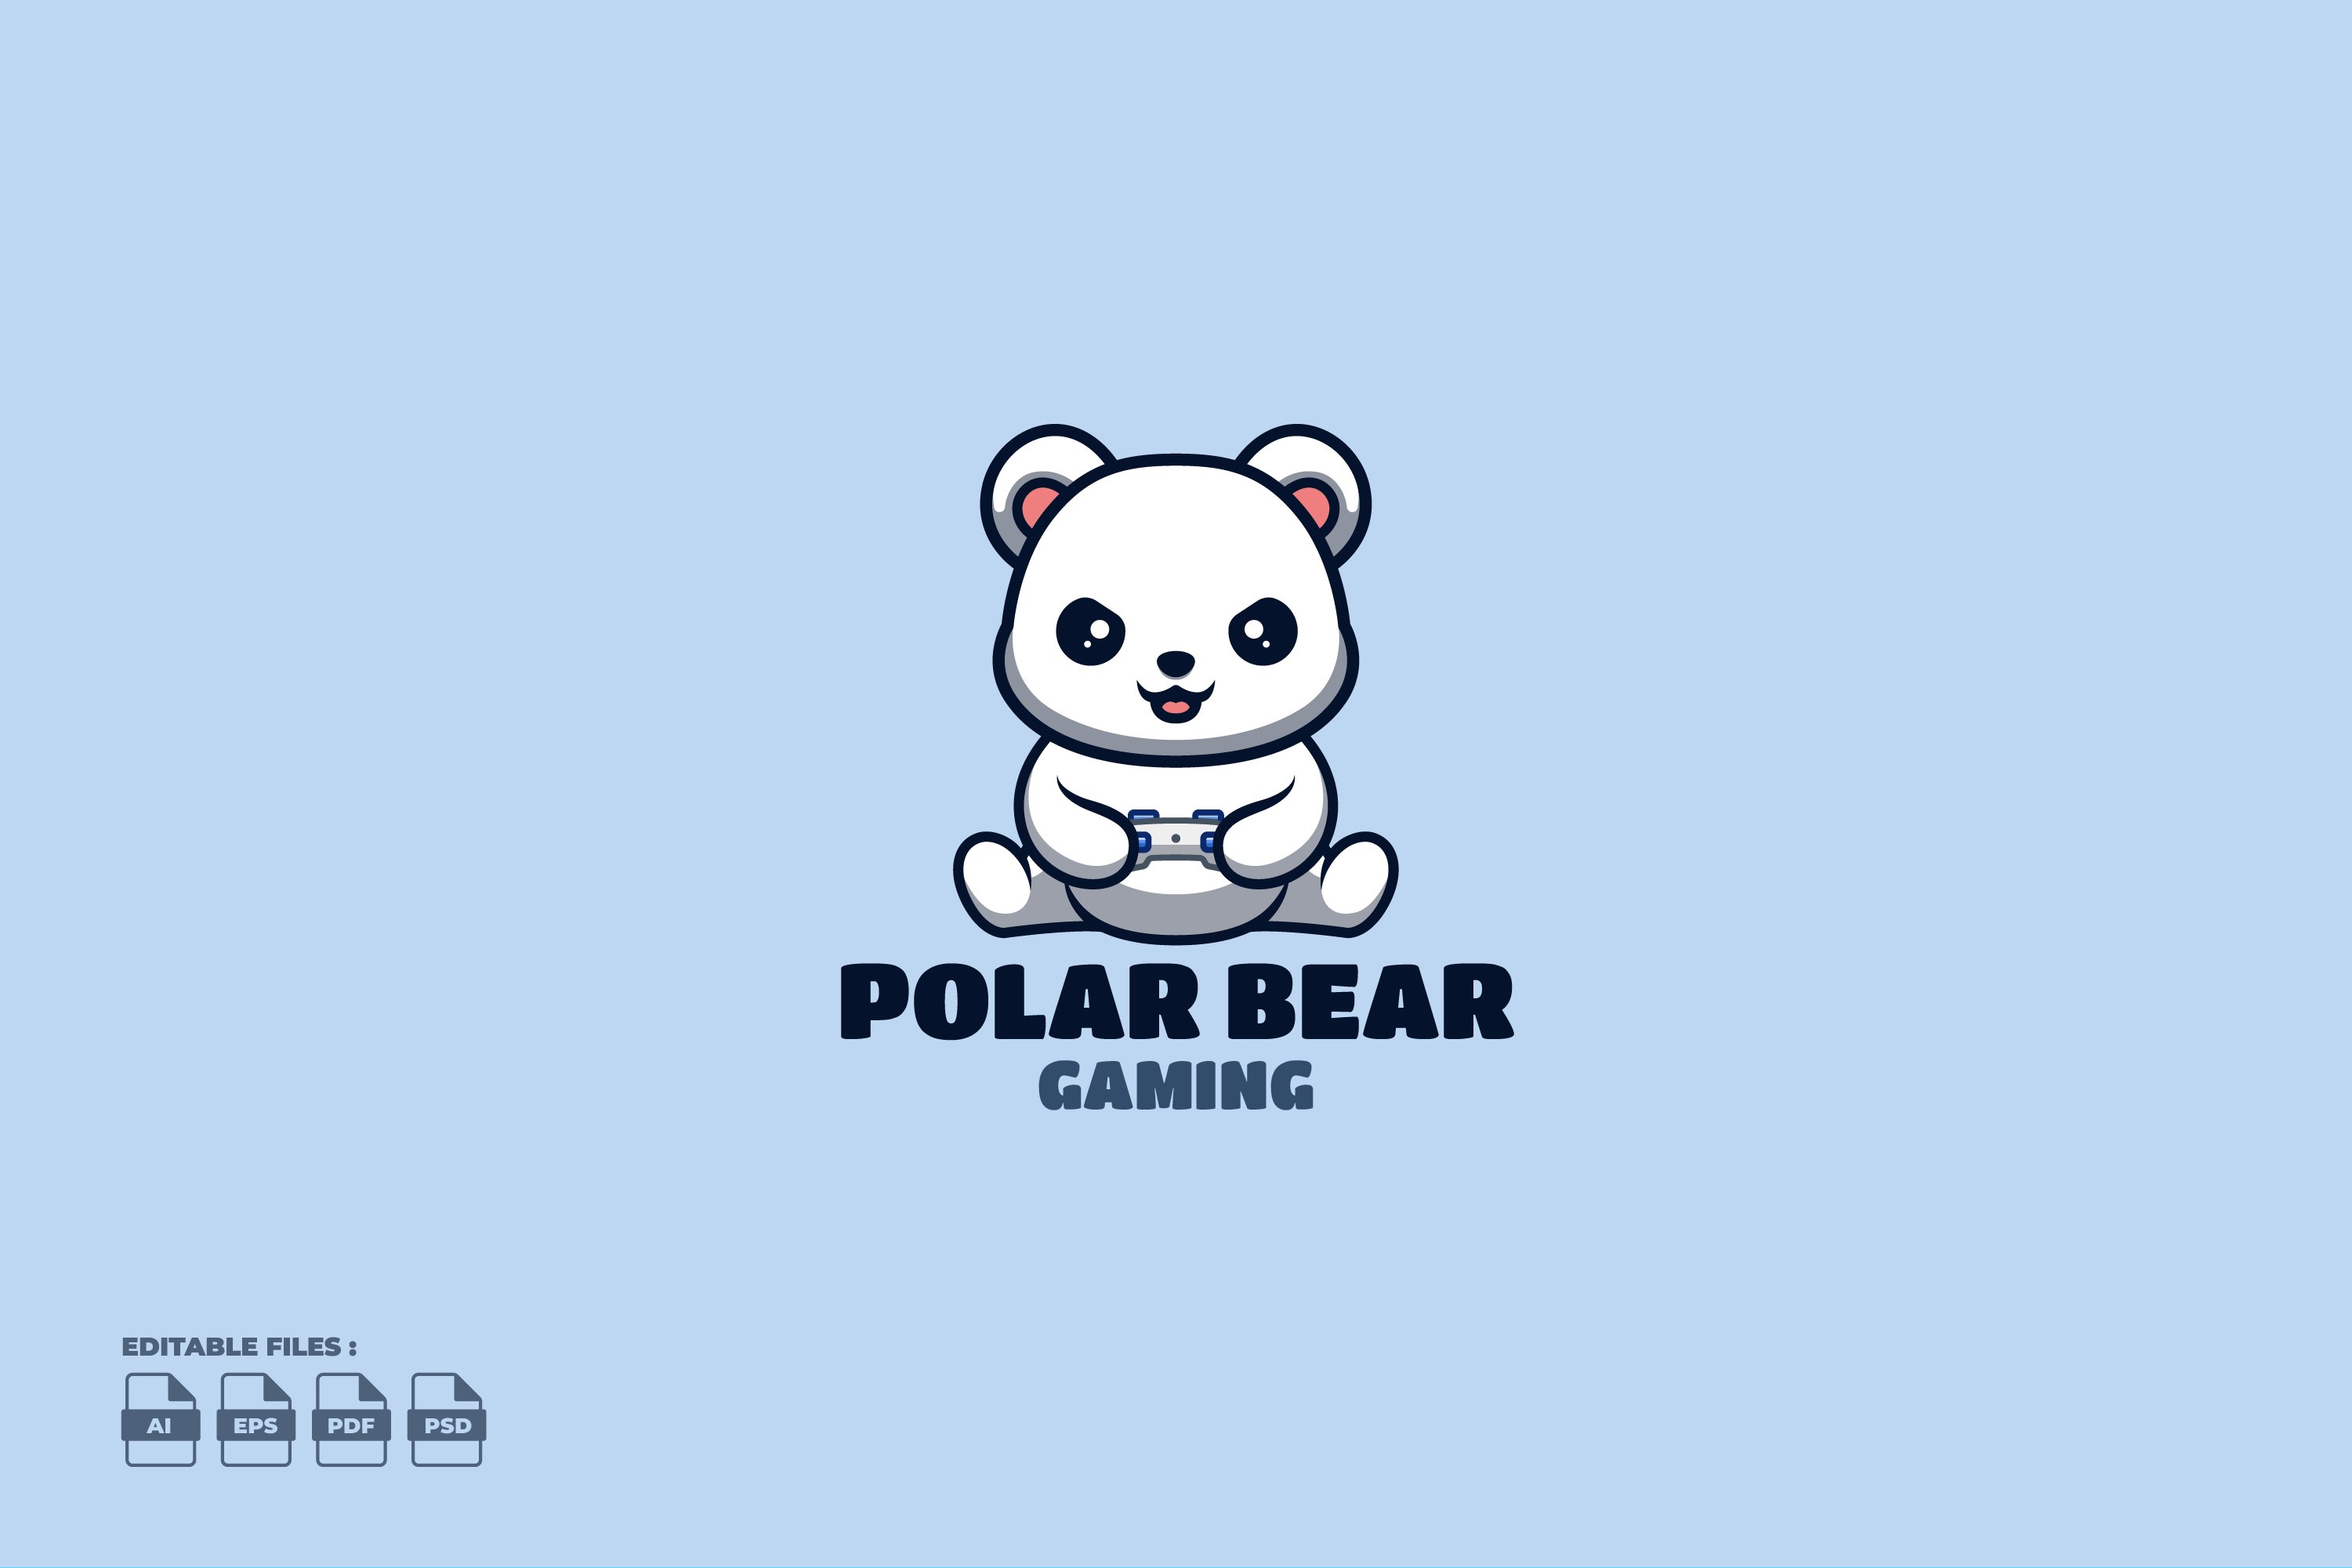 Gaming Polar Bear Cute Mascot Logo cover image.